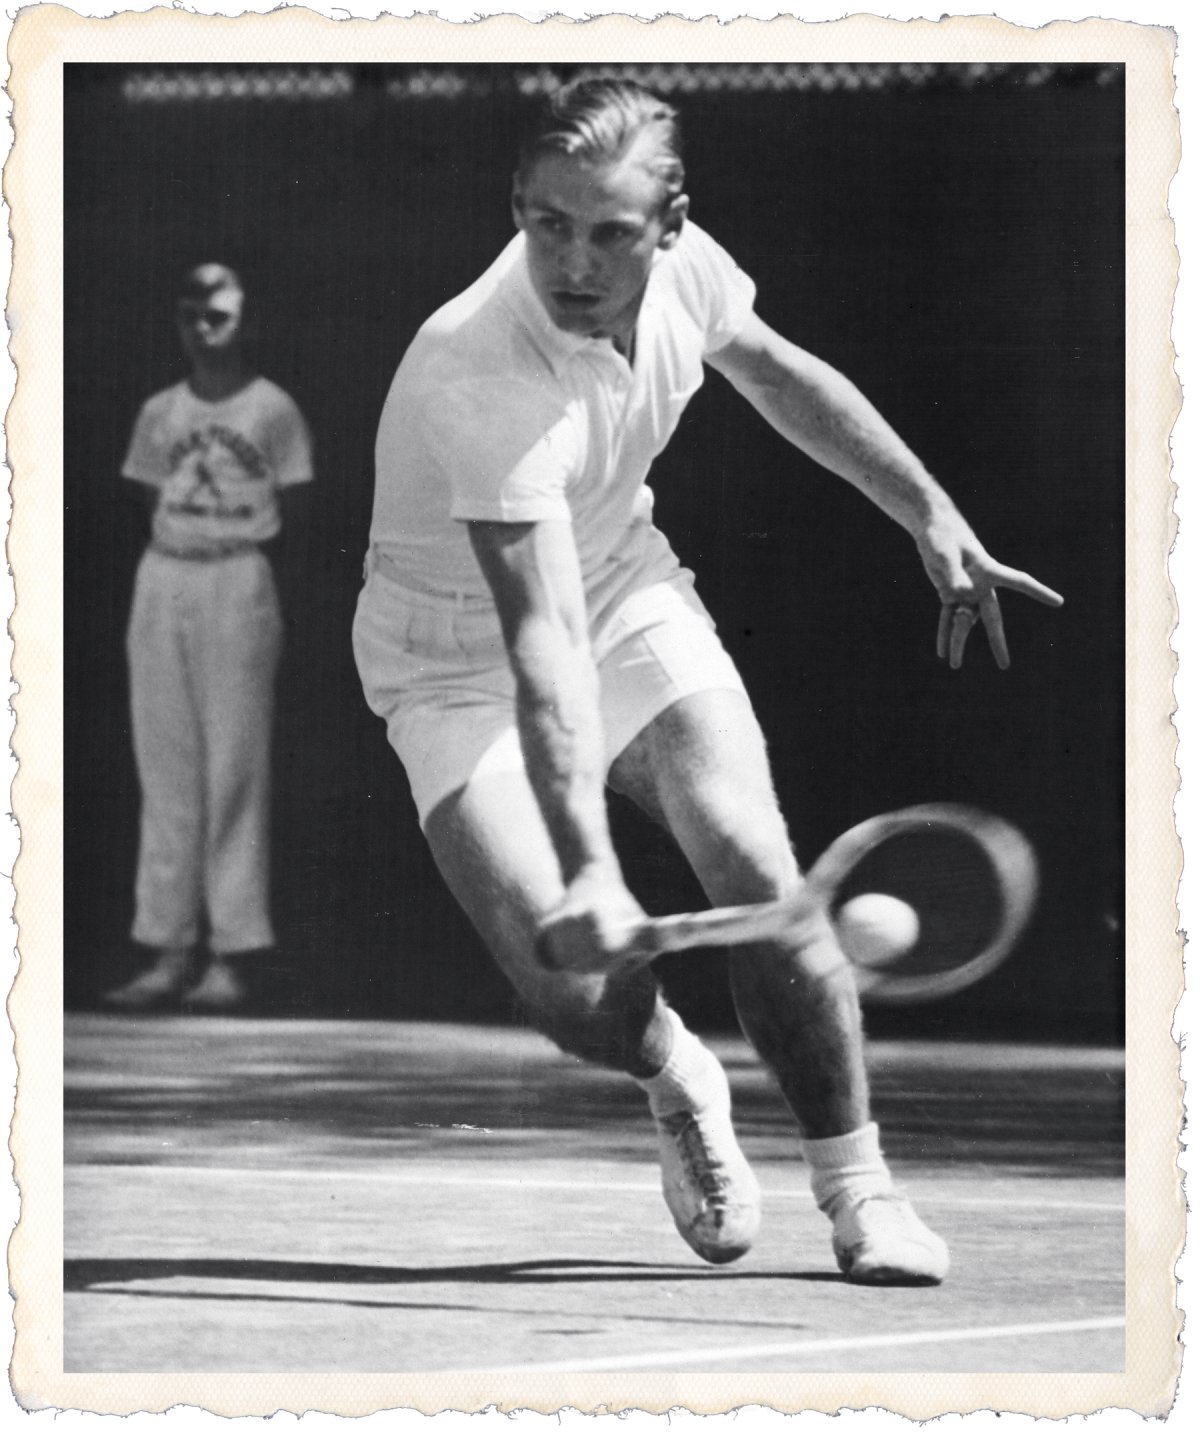 Joe Hunt playing tennis